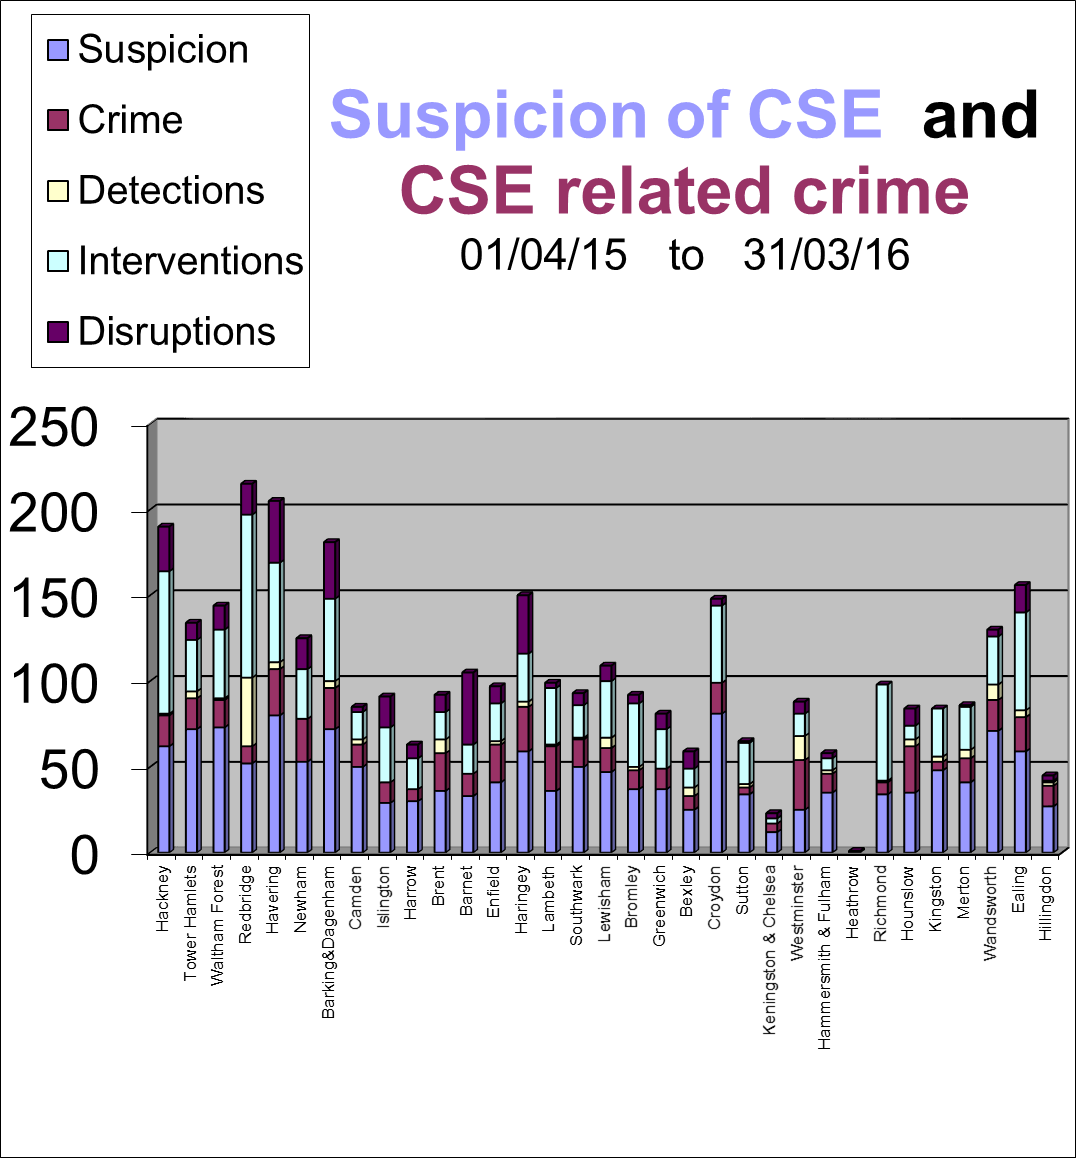 Suspicion of CSE and CSE Related Crime 2015/16